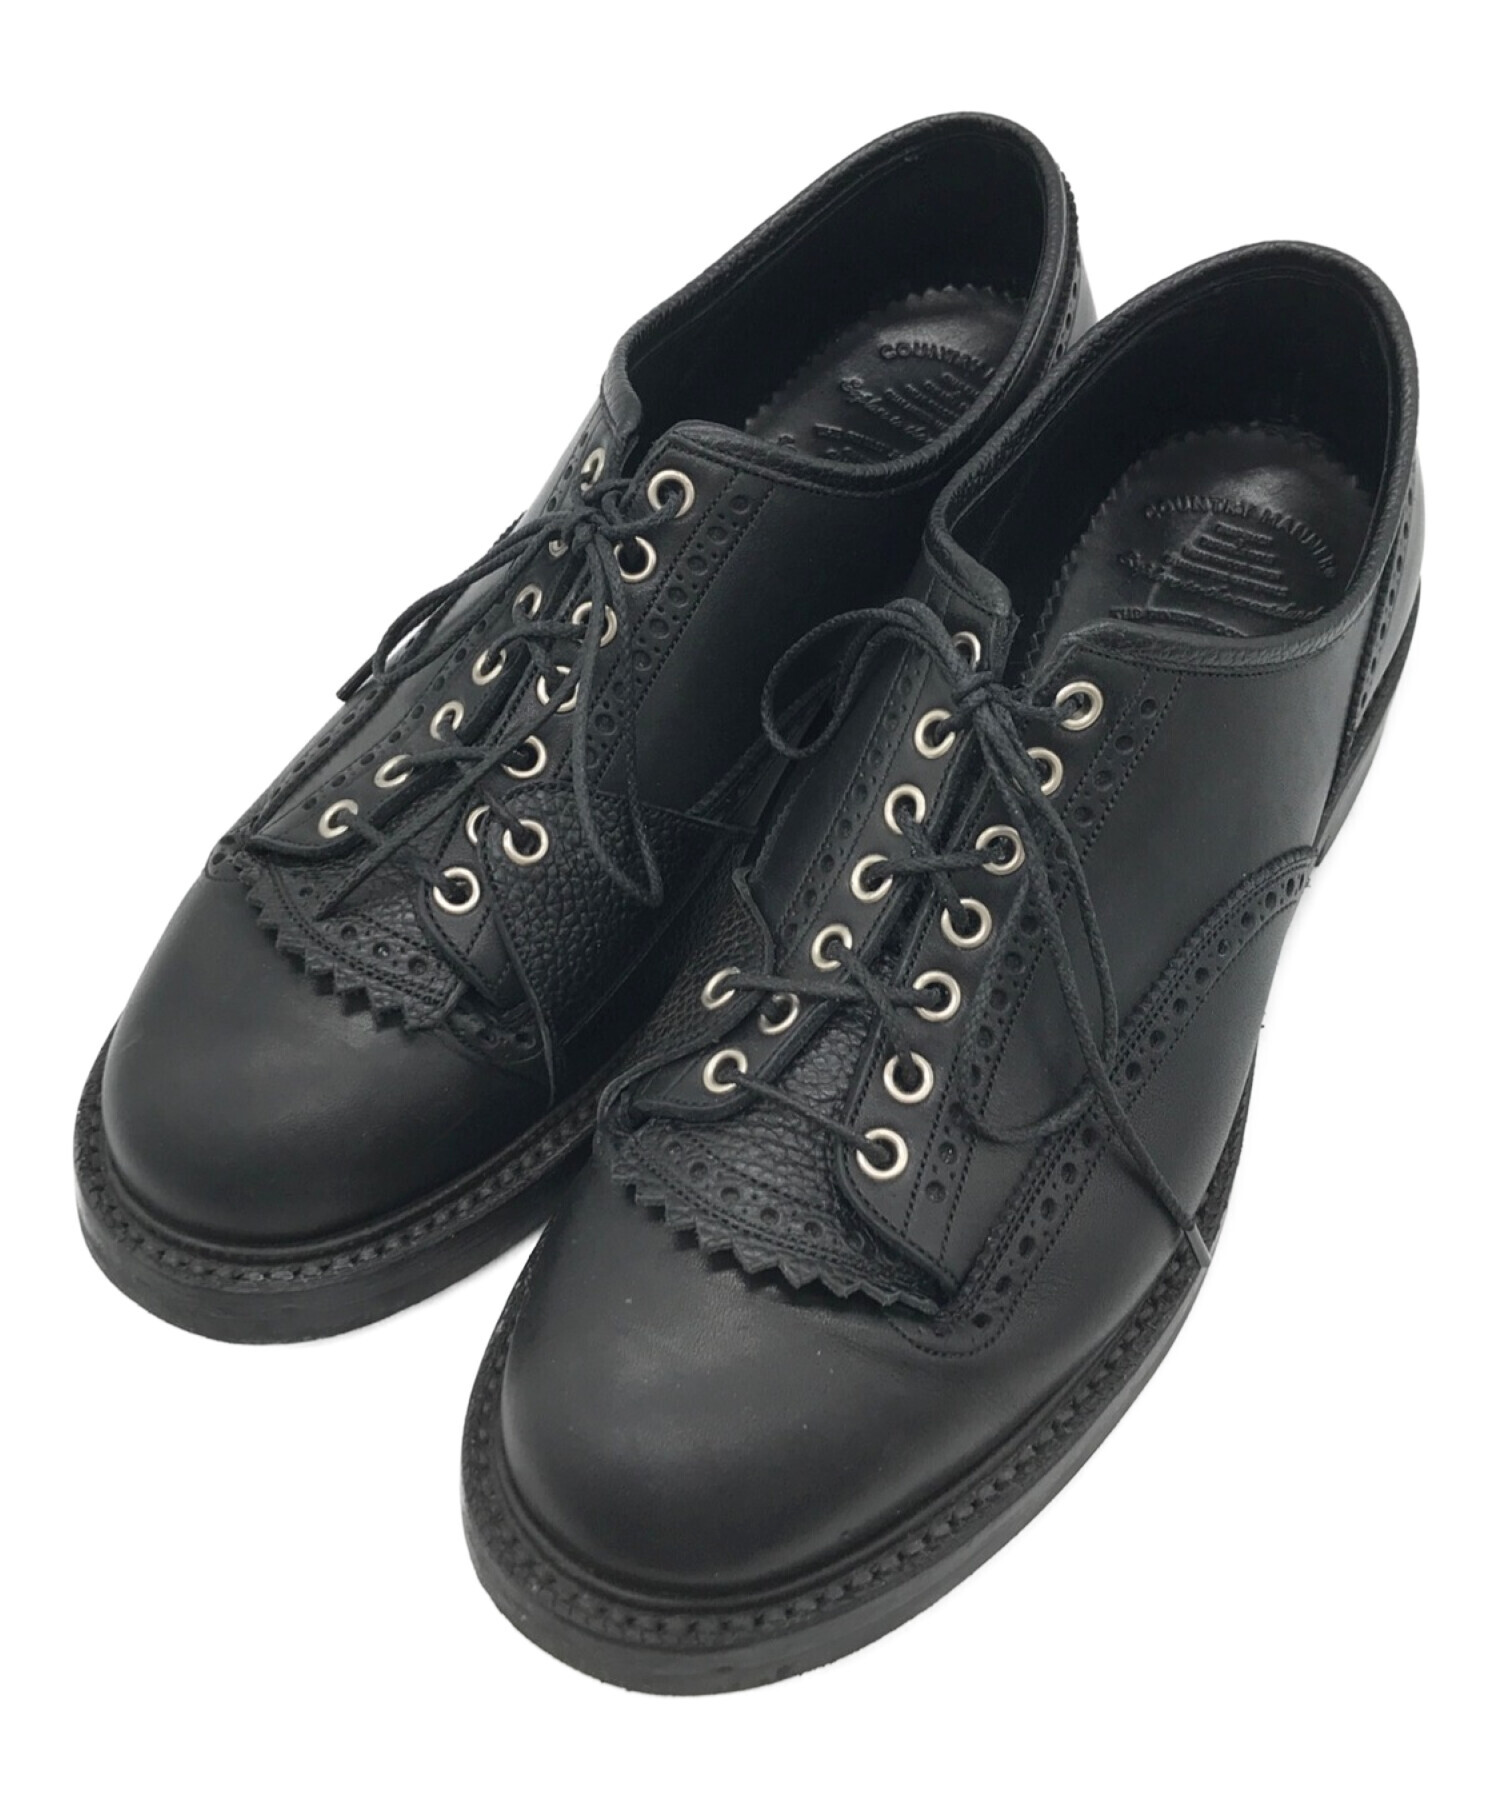 foot the coacher (フットザコーチャー) COMMANDO SHOES ブラック サイズ:8 1/2